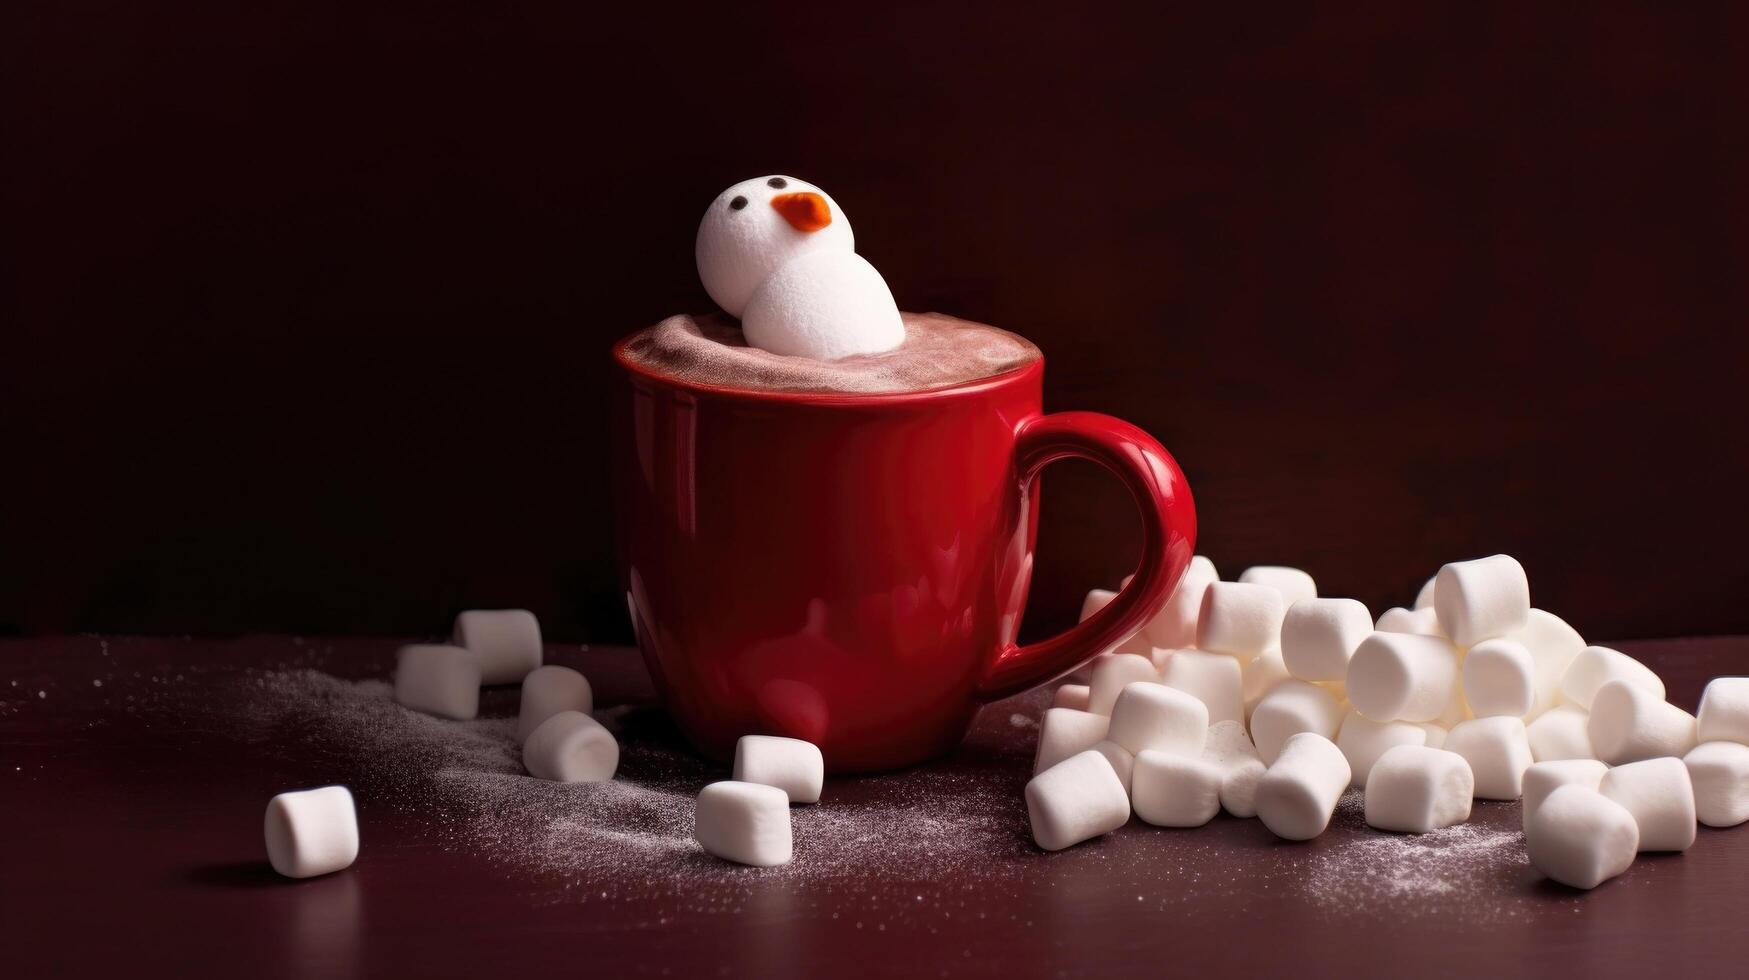 Red hot chocolate mug with melted marshmallows. Illustration photo